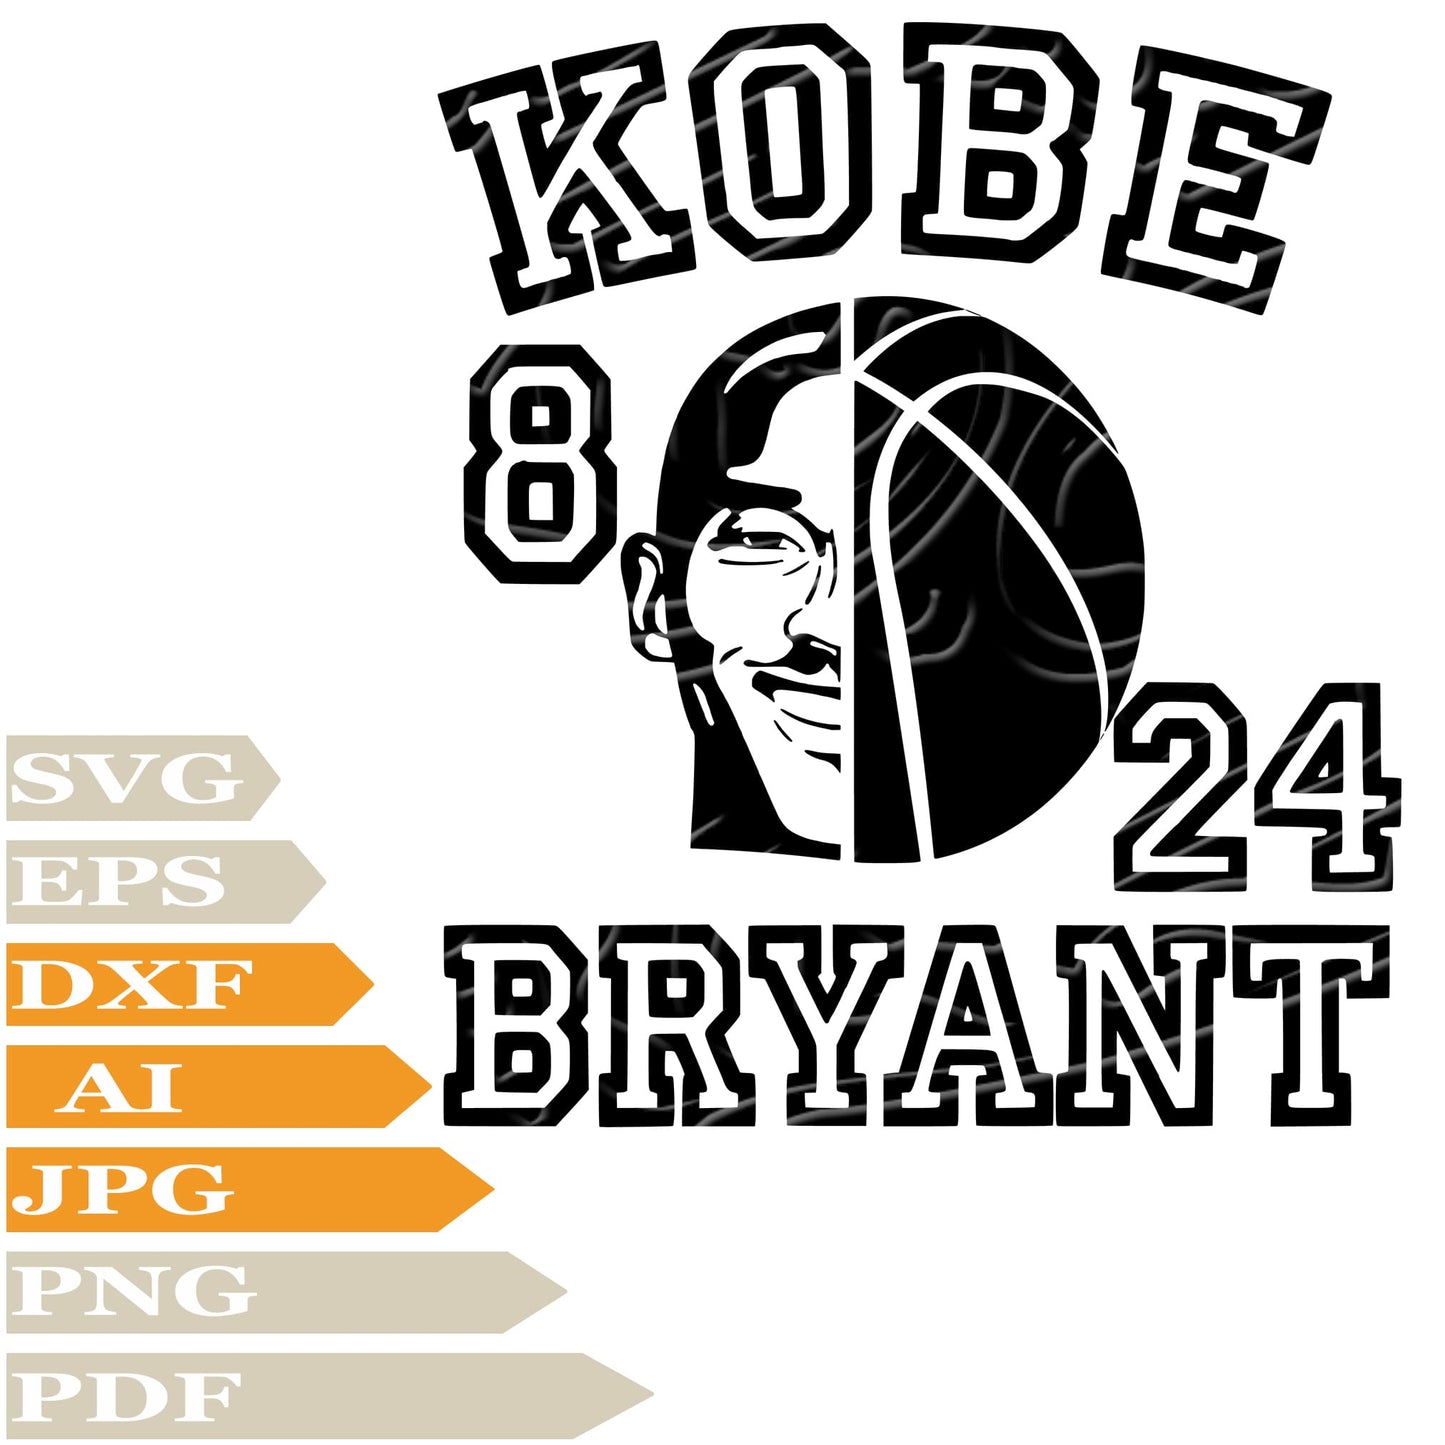 Kobe Bryant,Kobe Braynt Face Svg File,Svg Design,Clipart,Cut file,Png,Vector Graphics,Svg For Tattoo,Image File,Cli part,Svg For Cricut,Free Download,Digital File,Svg For Silhouette